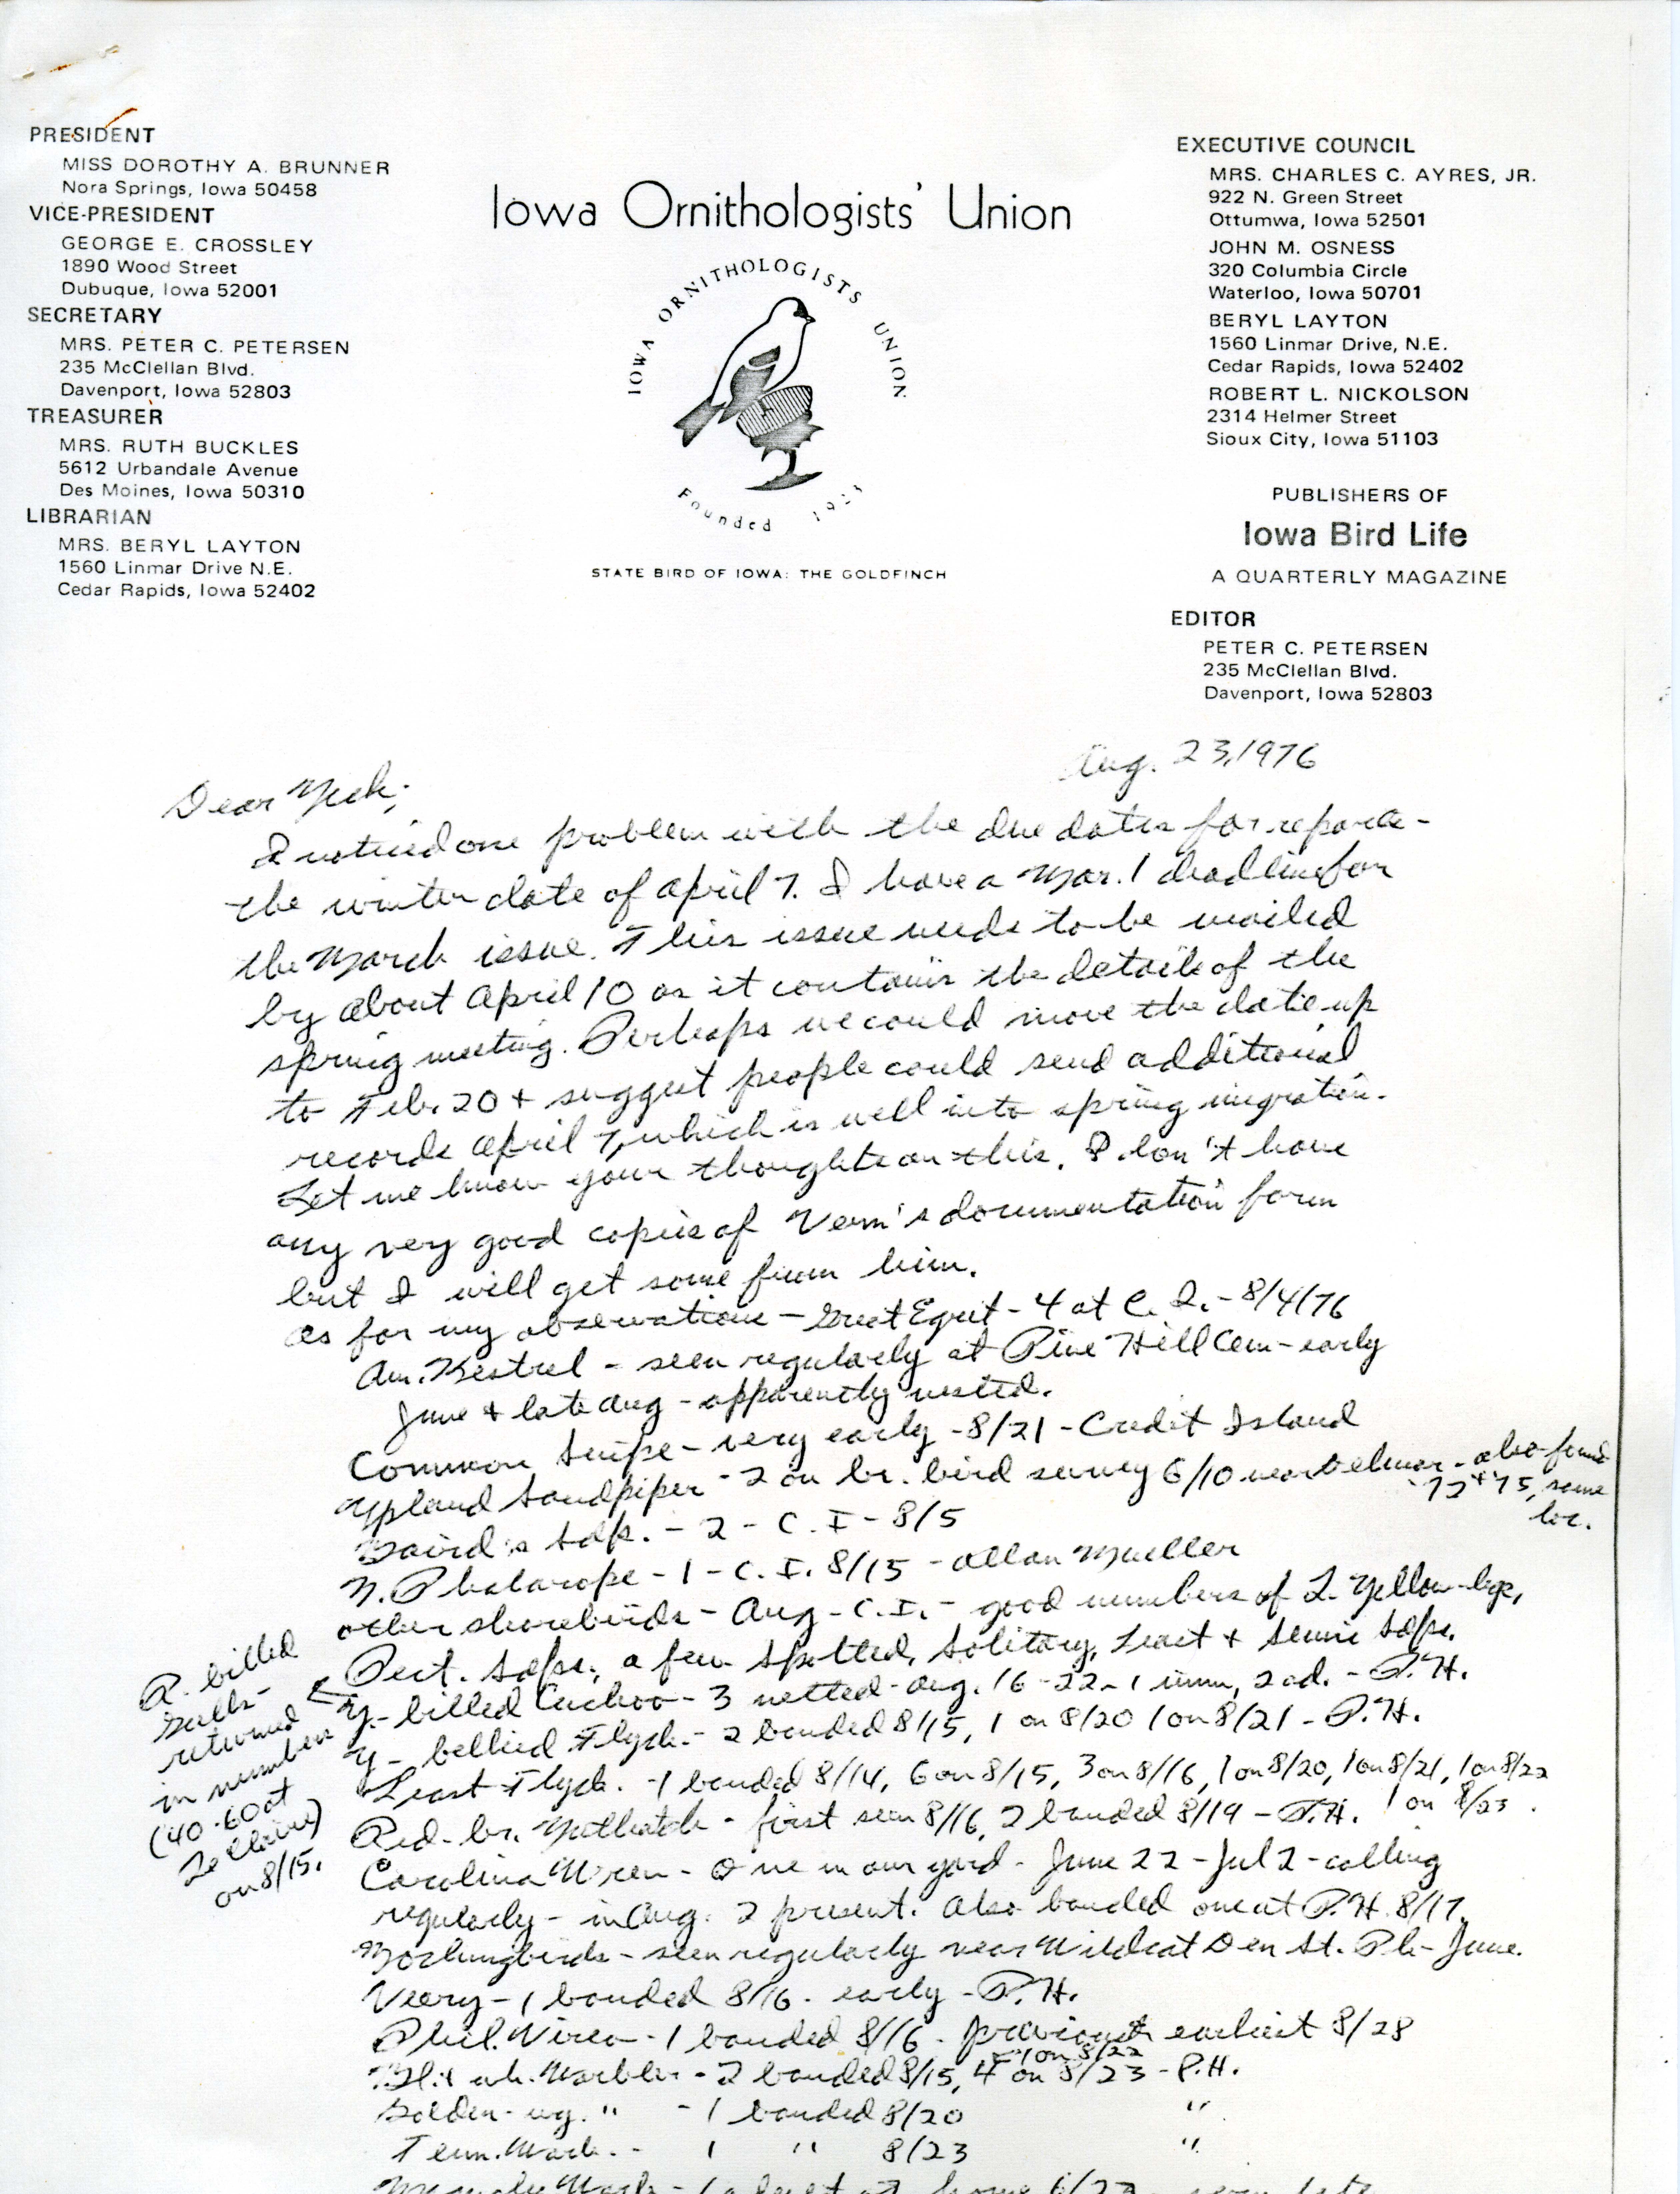 Letter from Peter Petersen to Nicholas Halmi regarding bird sightings, August 23, 1976